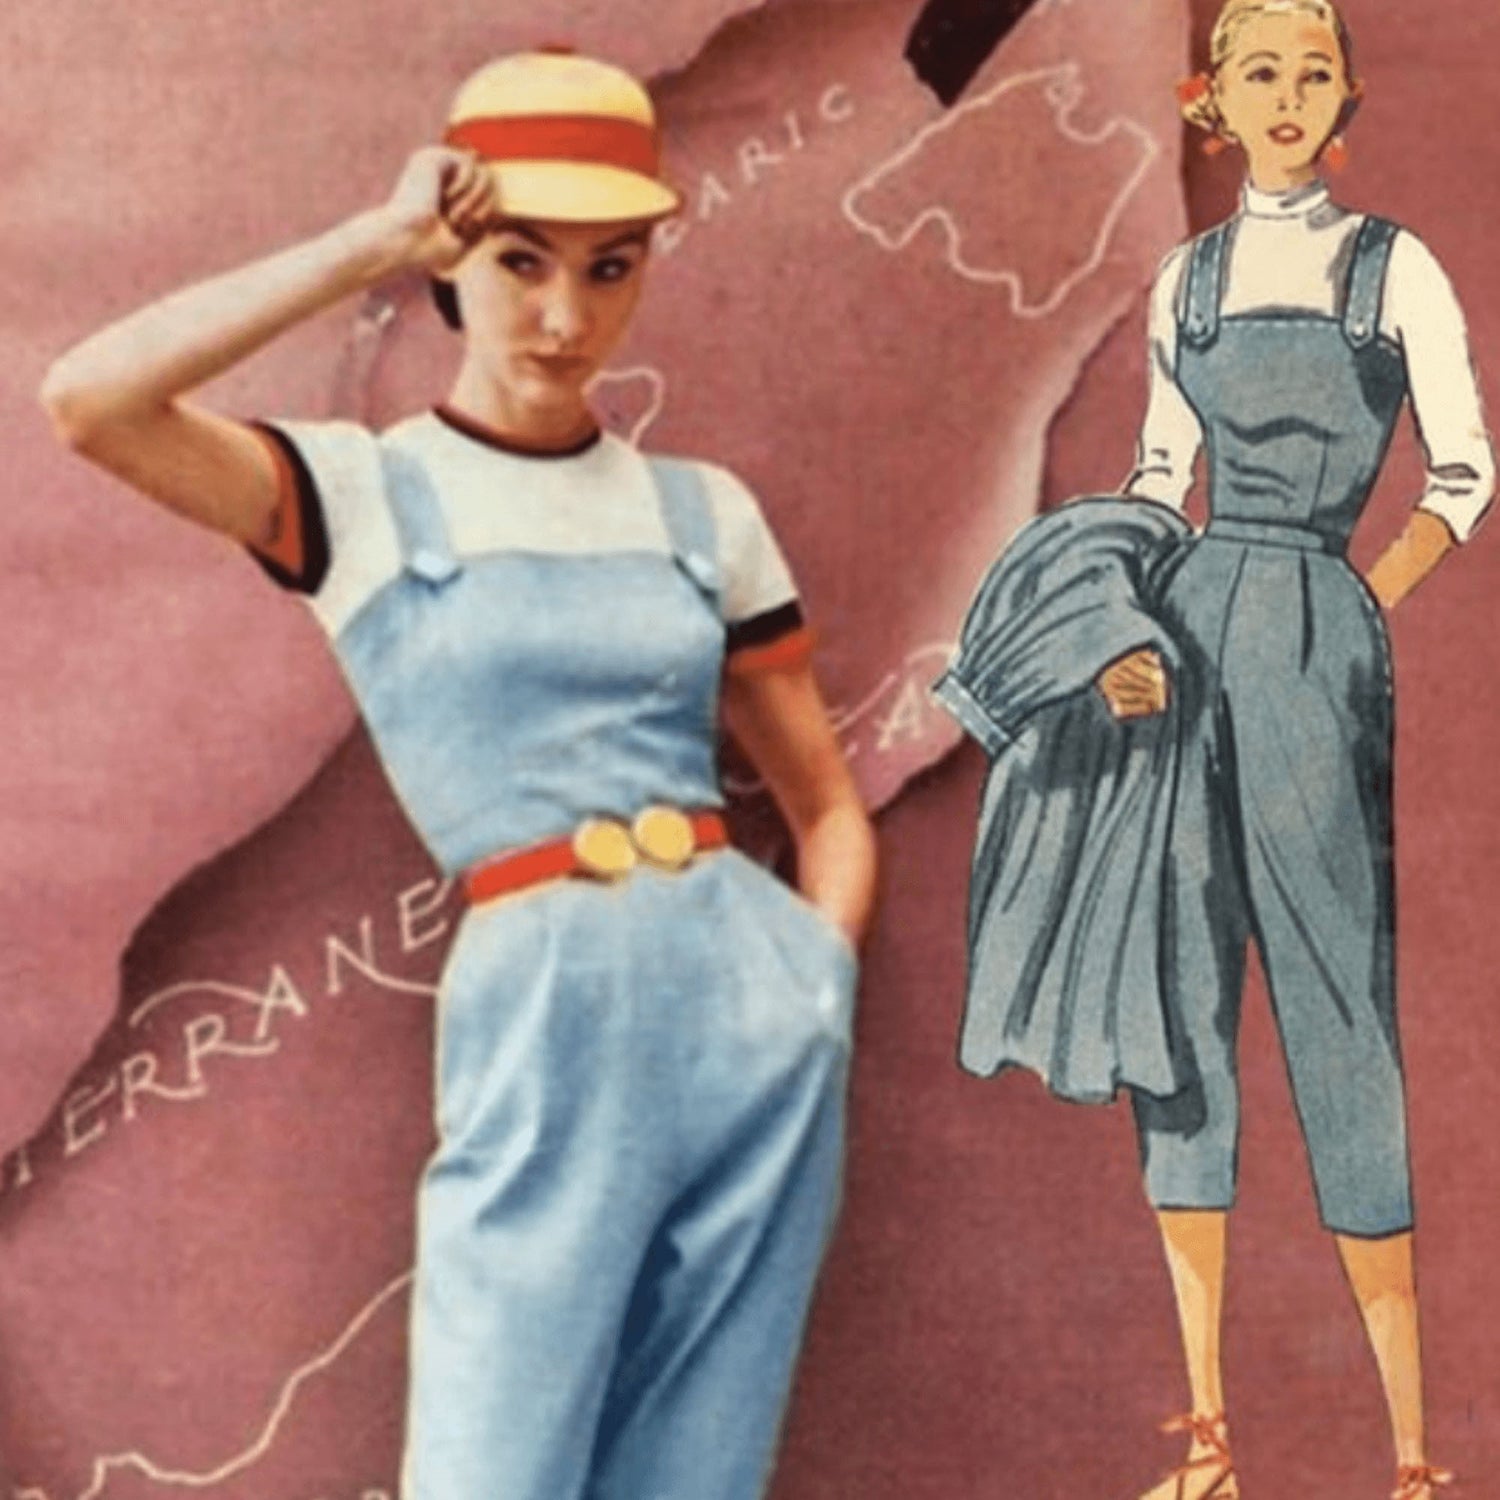 Pattern cover illustration of women wearing top, skirt, slacks and shorts.